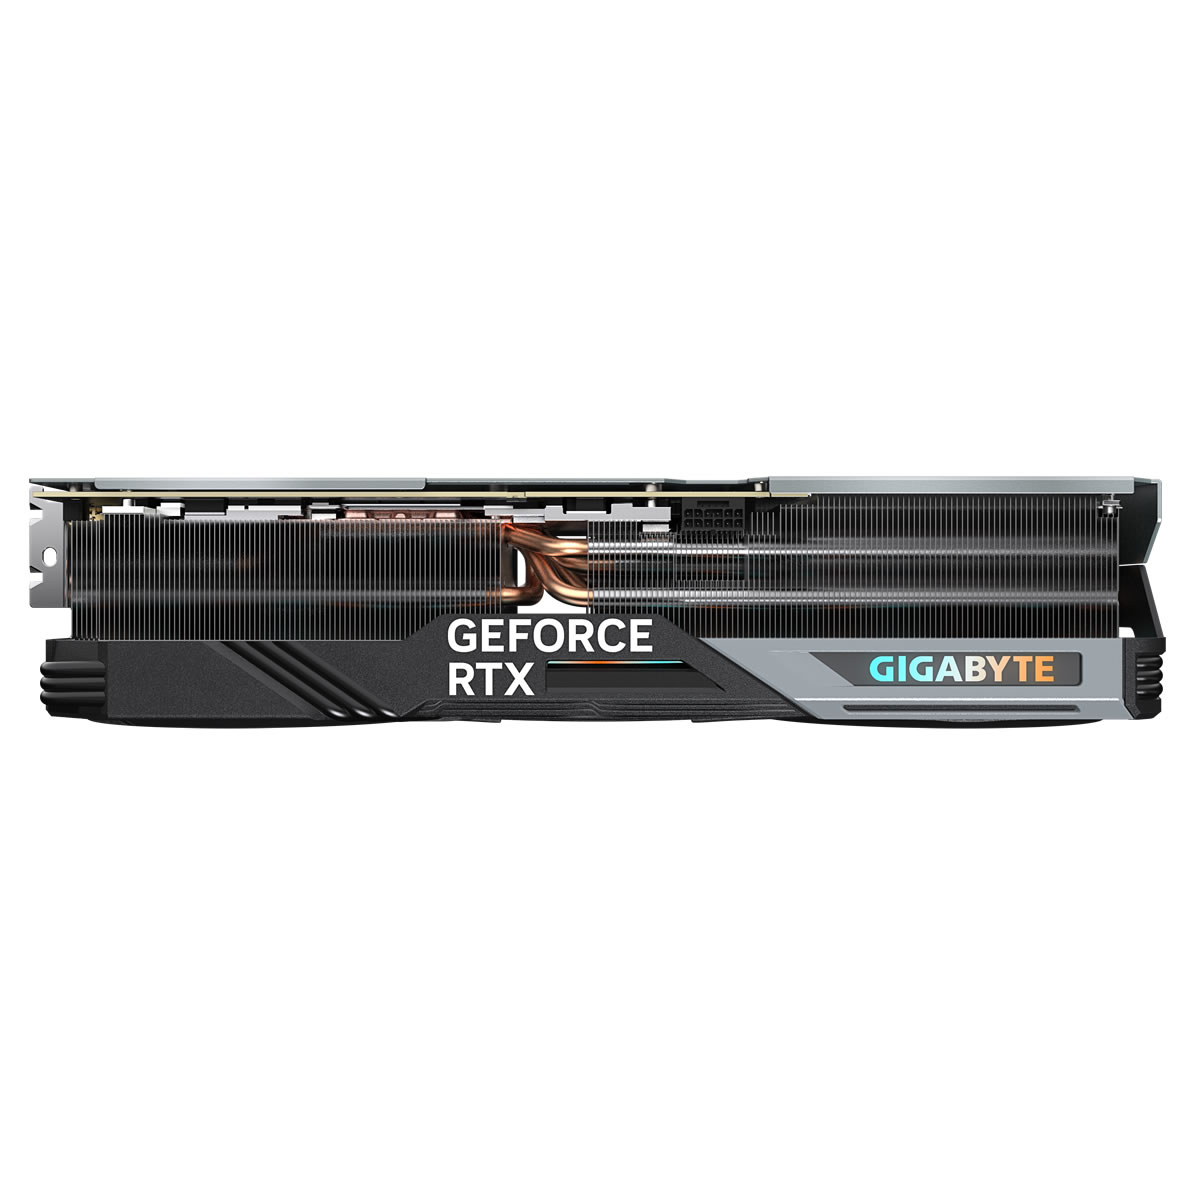 Gigabyte - Gigabyte GeForce RTX 4090 Gaming OC 24GB GDDR6X PCI-Express Graphics Card